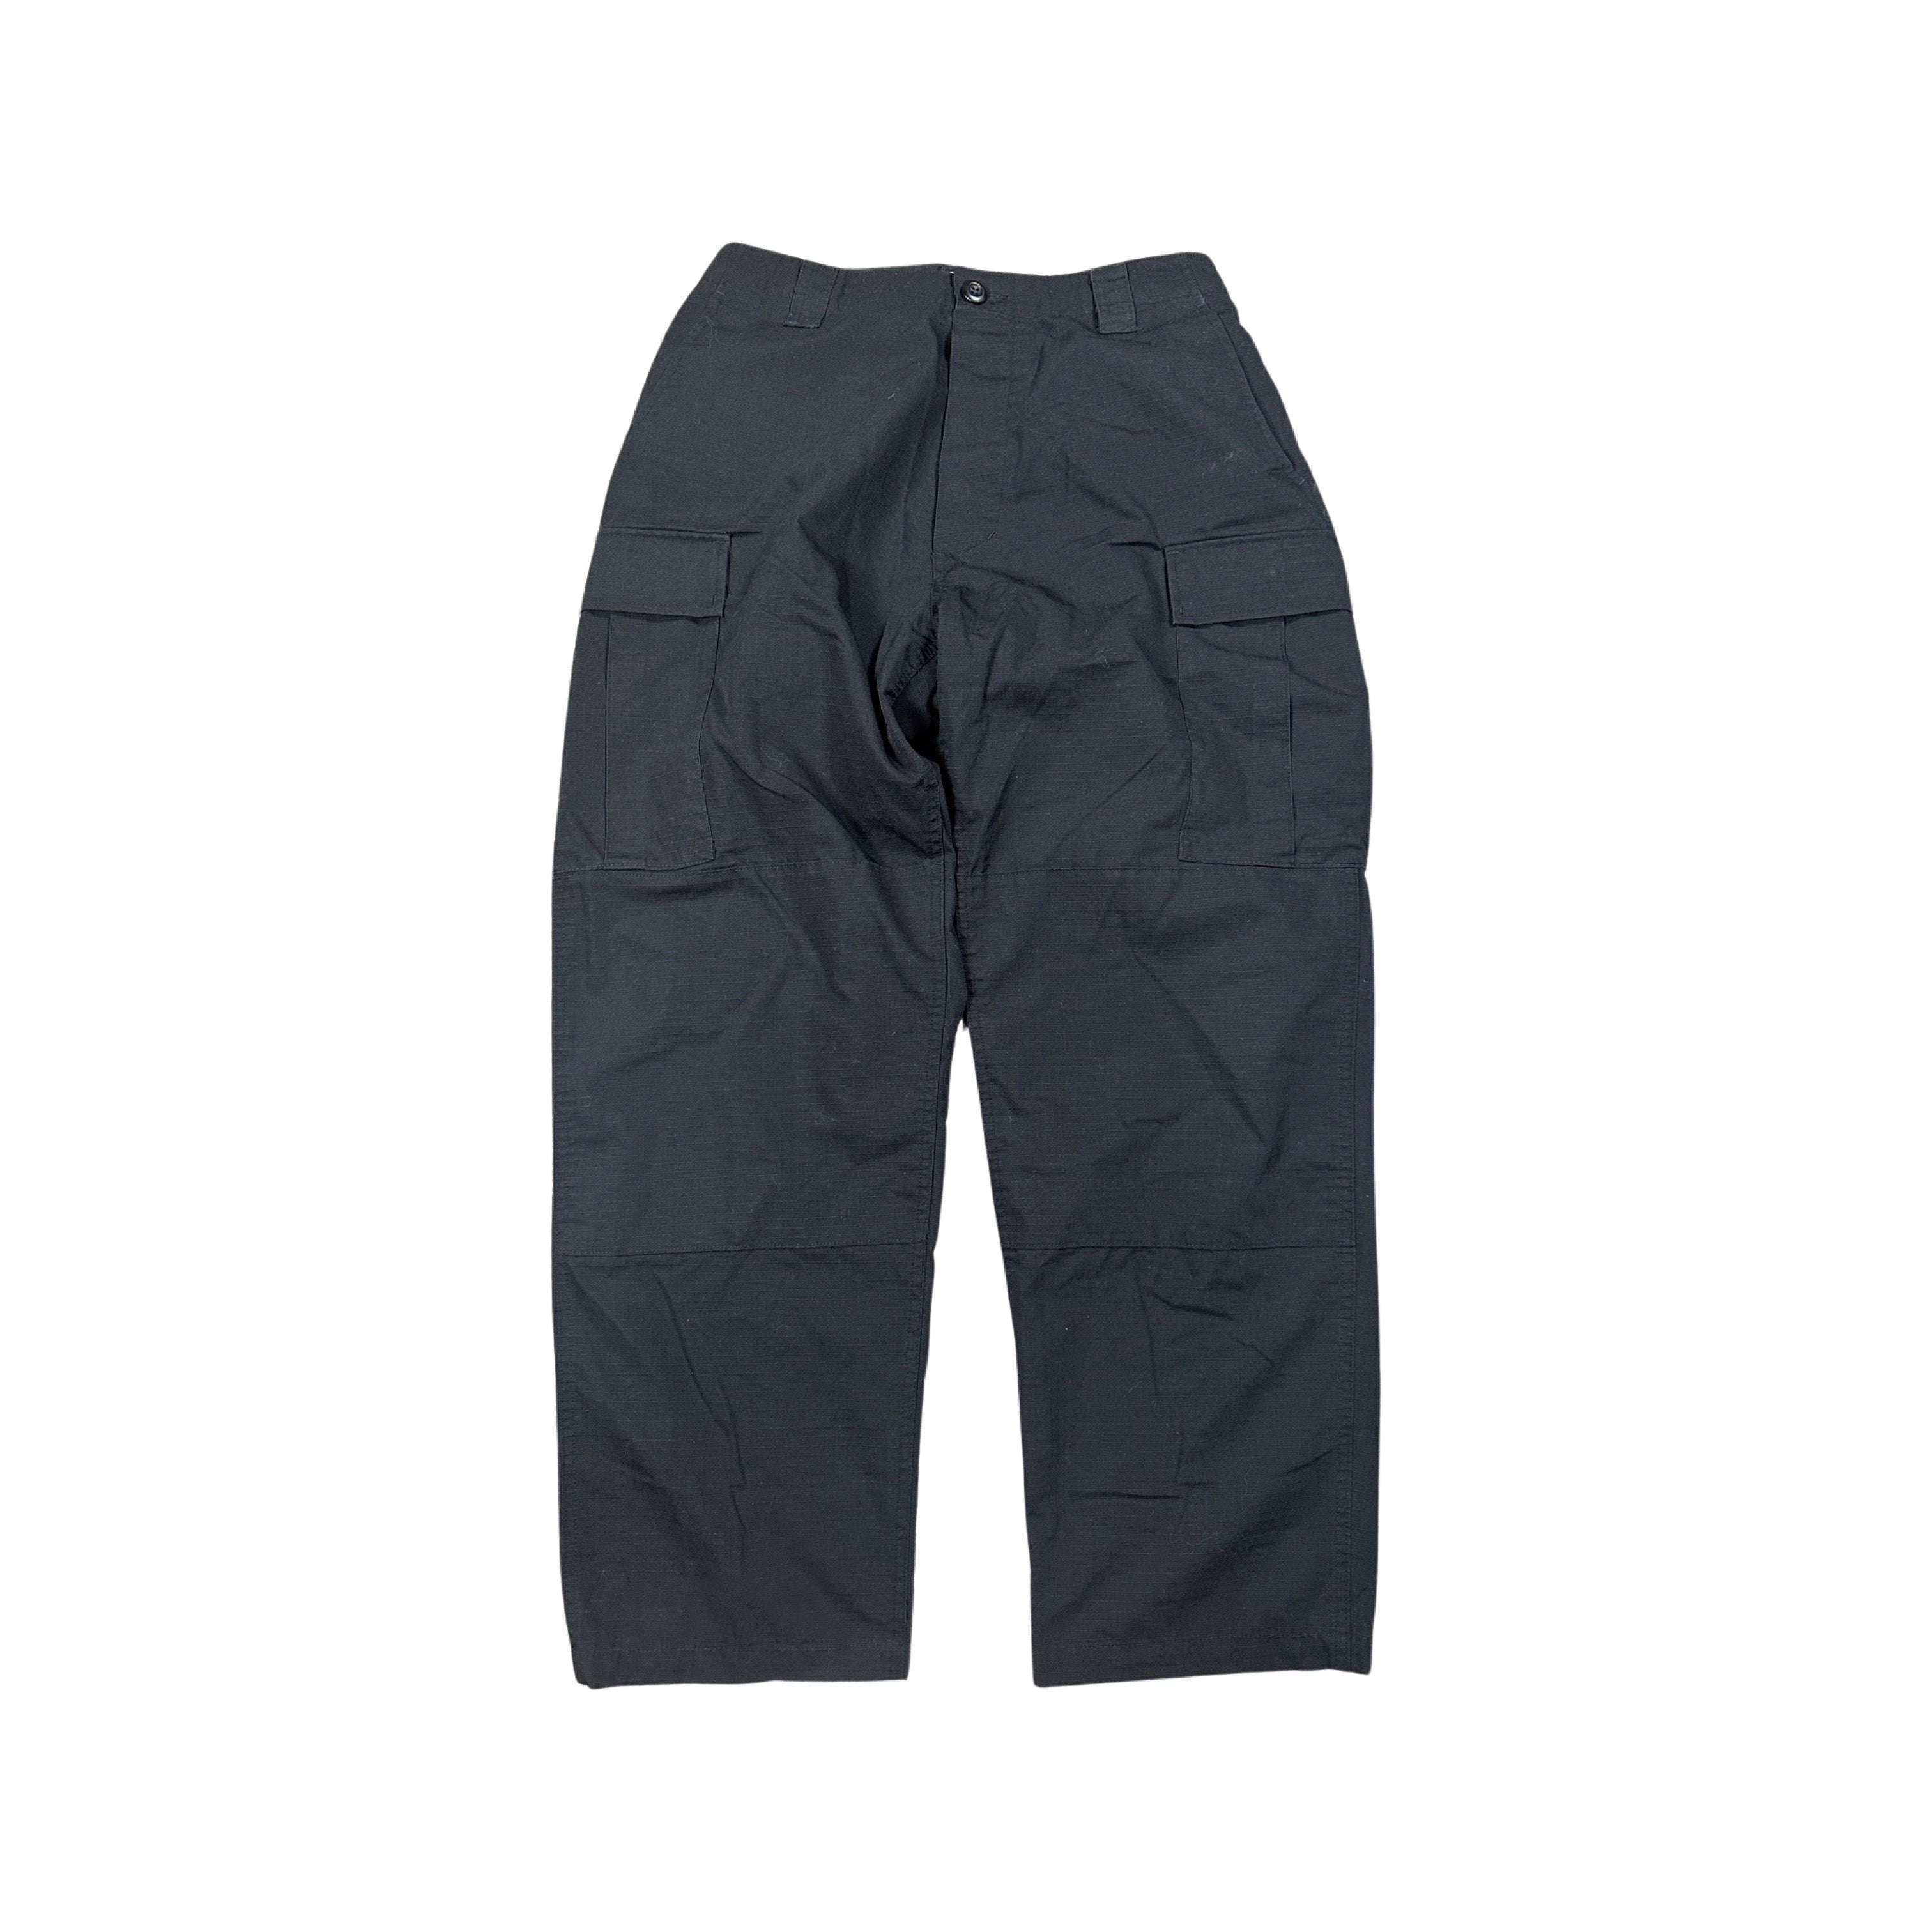 Black CQR Cargo Pants (29”)